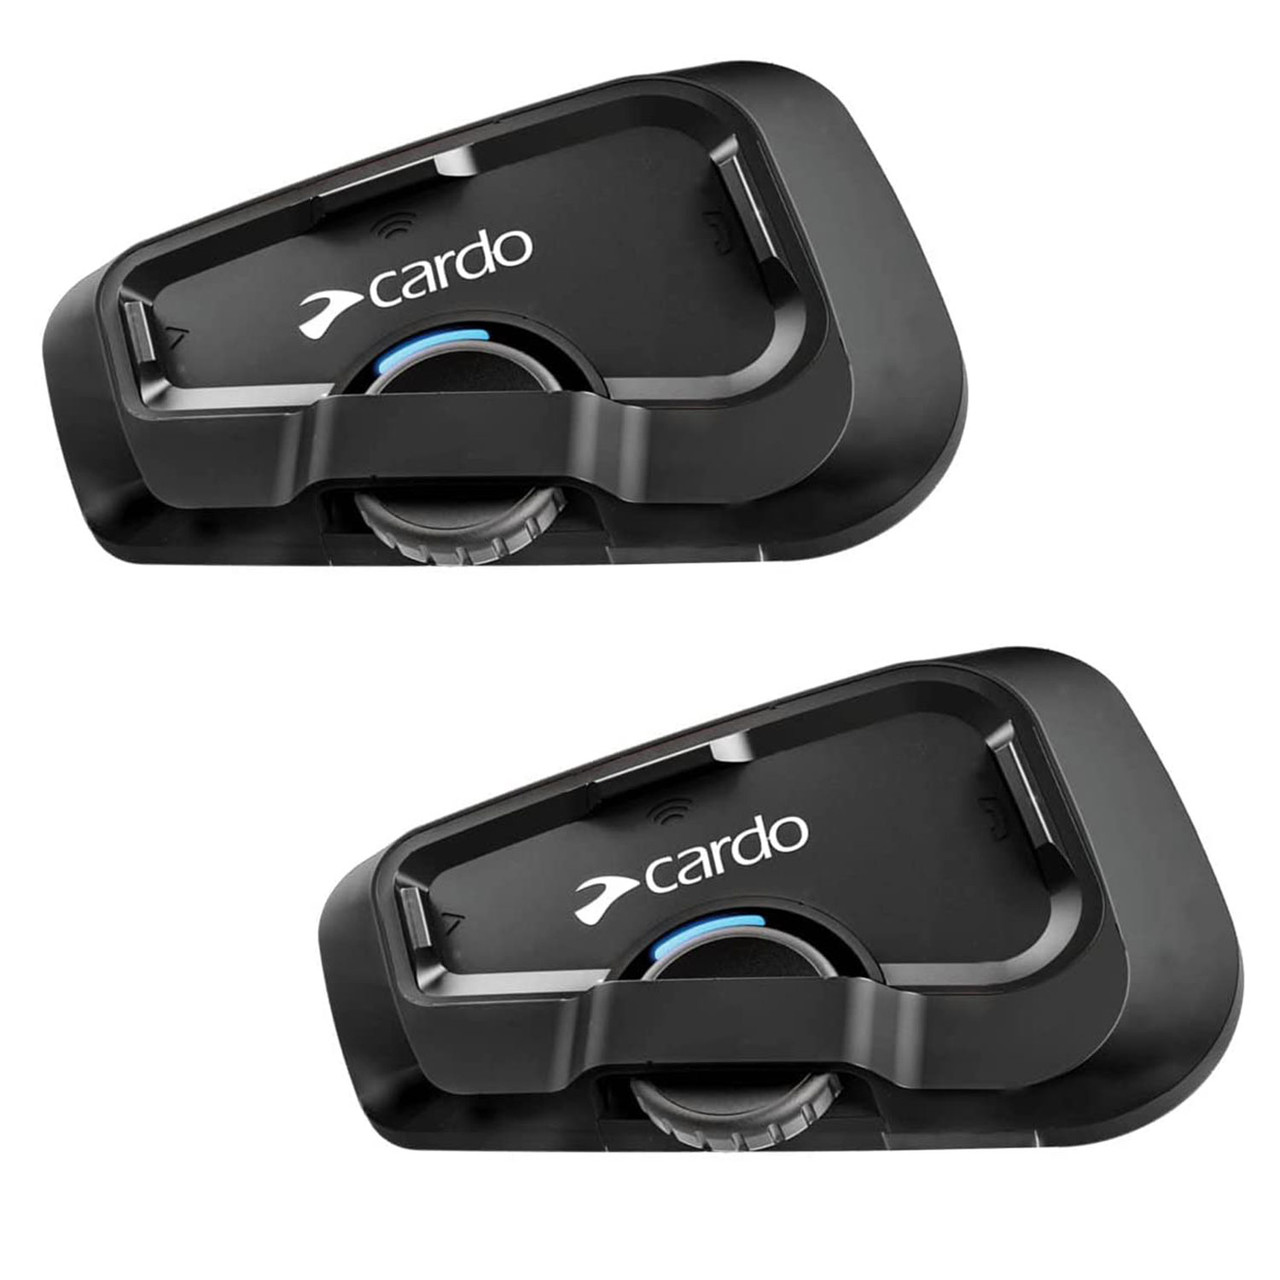 Cardo FREECOM 4X Owner Review & Install, Cardo Systems, Motorcycle  Bluetooth, Handsfree